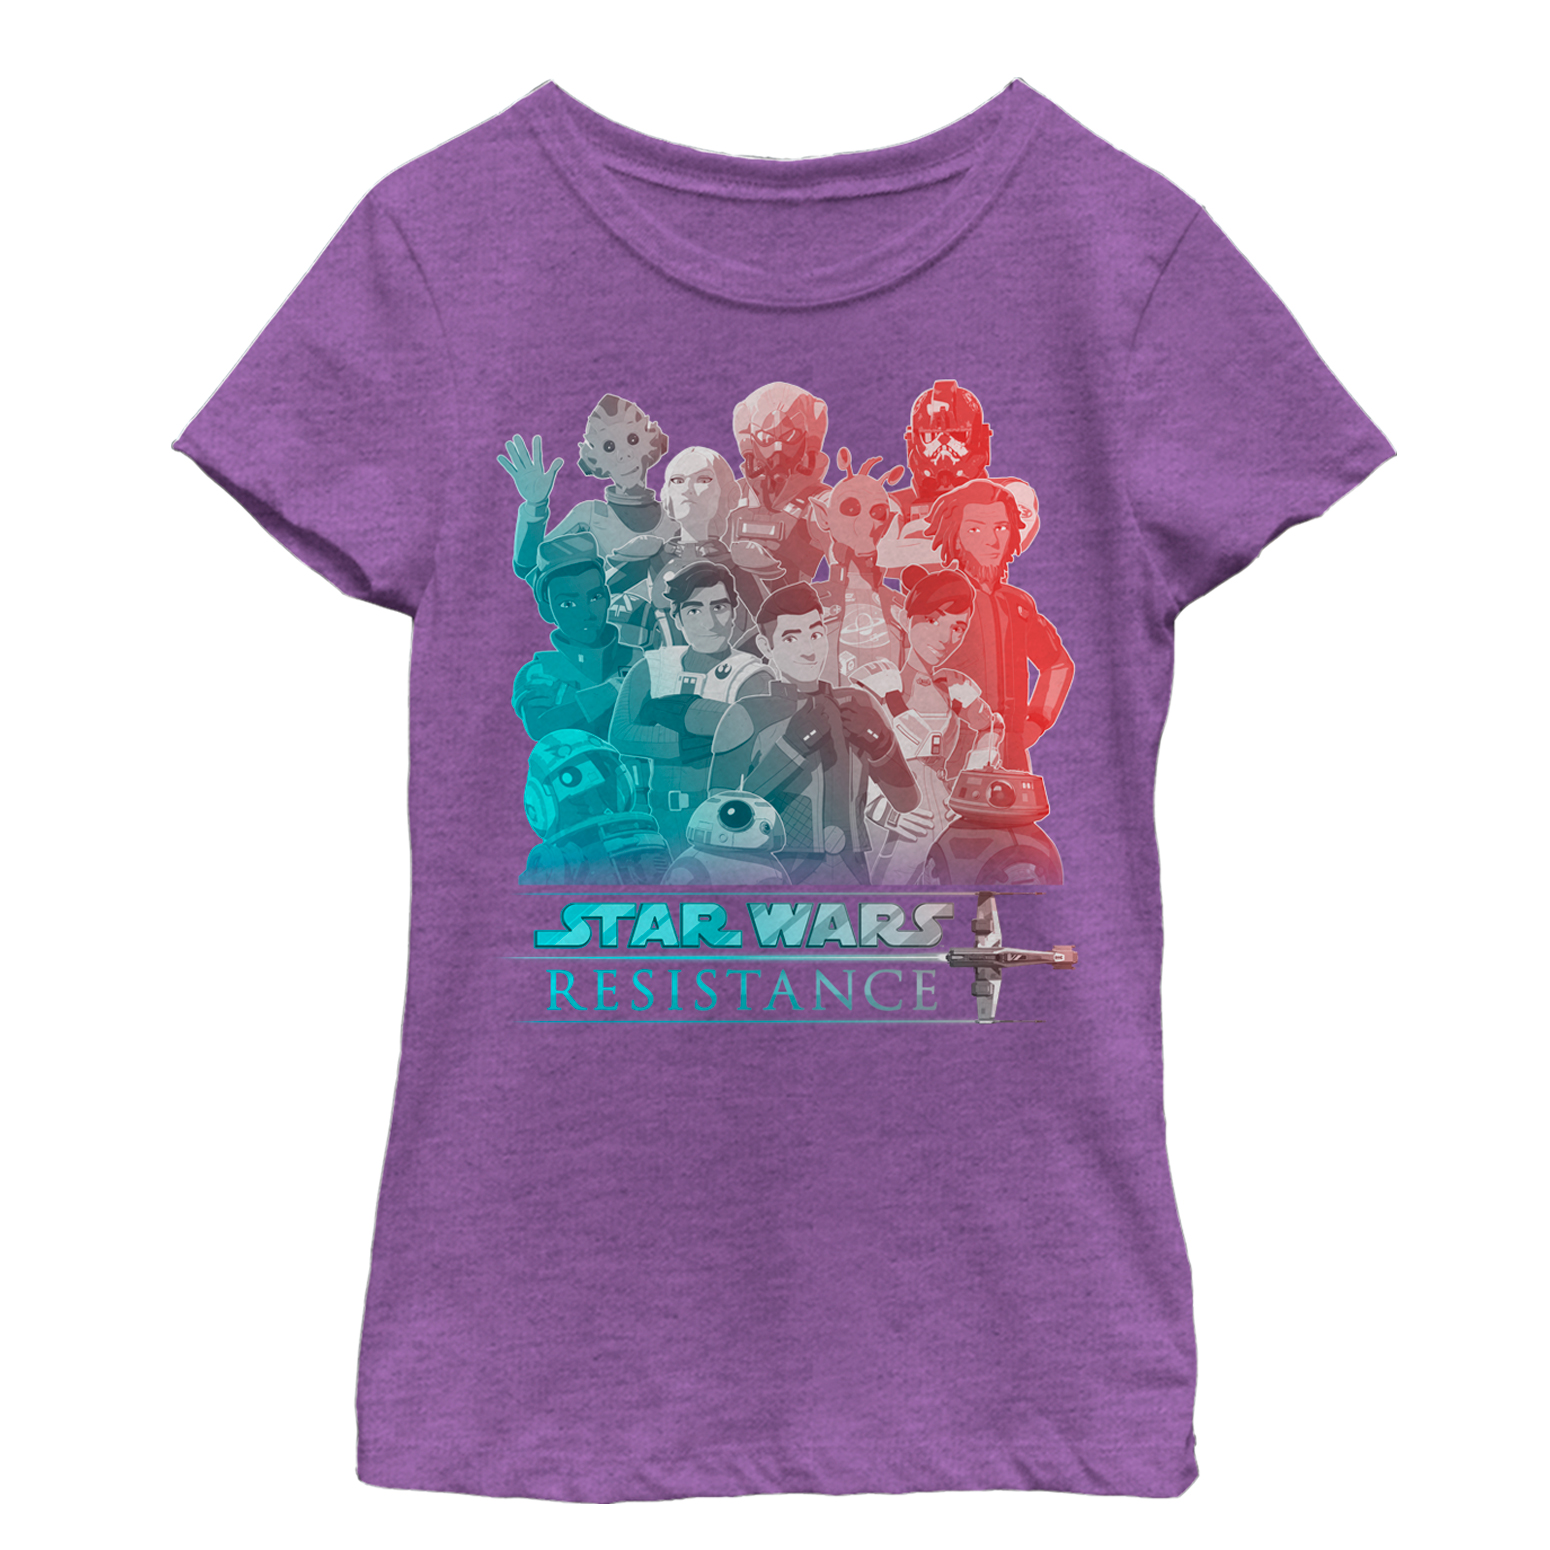 star wars resistance t shirt